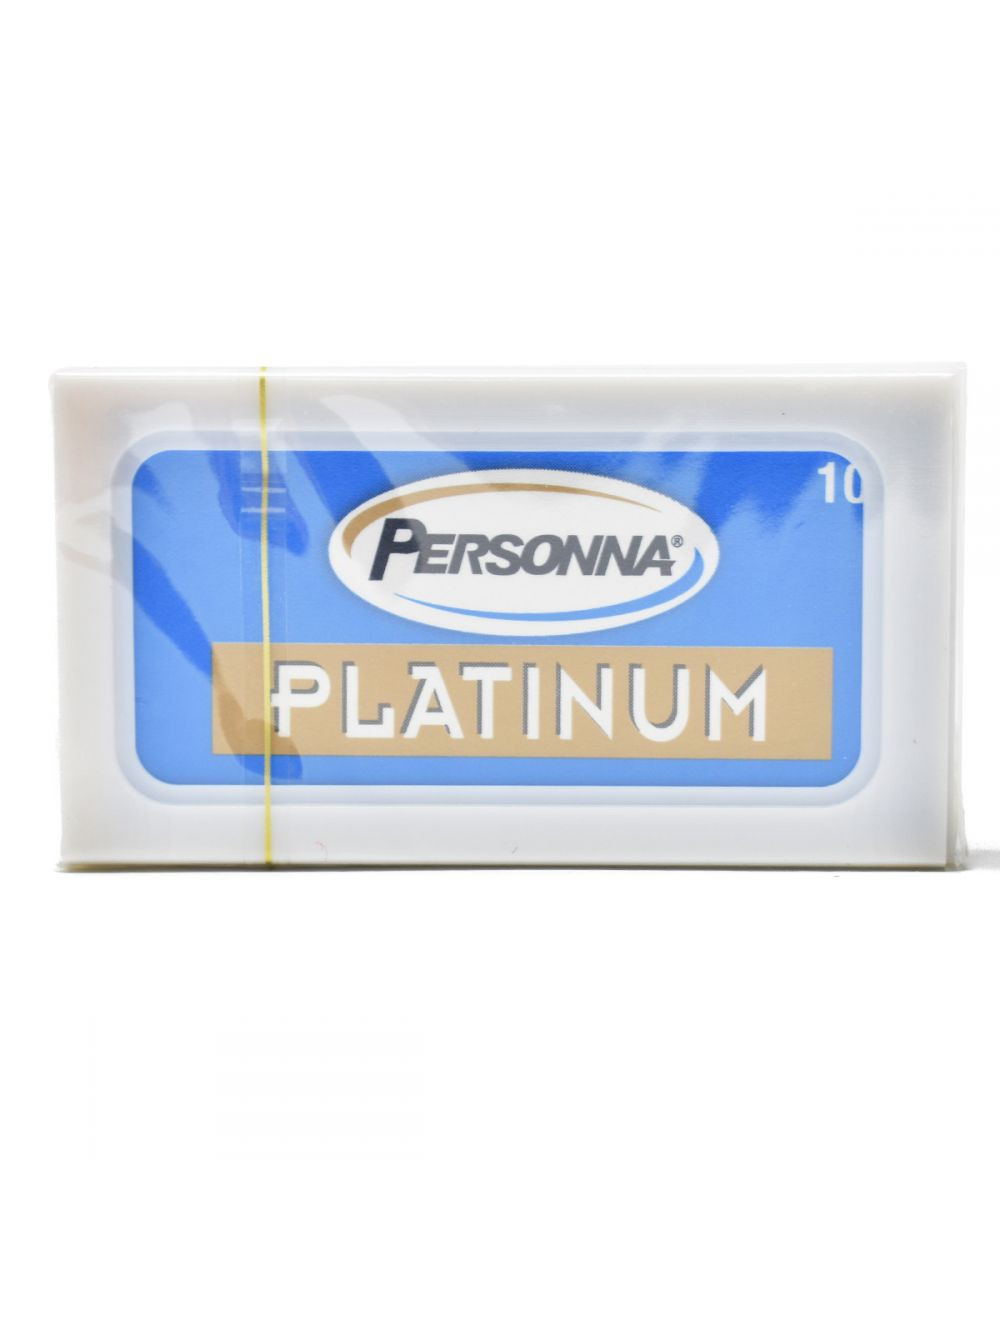 Product image 2 for Personna Platinum Chrome Double Edge Razor Blades